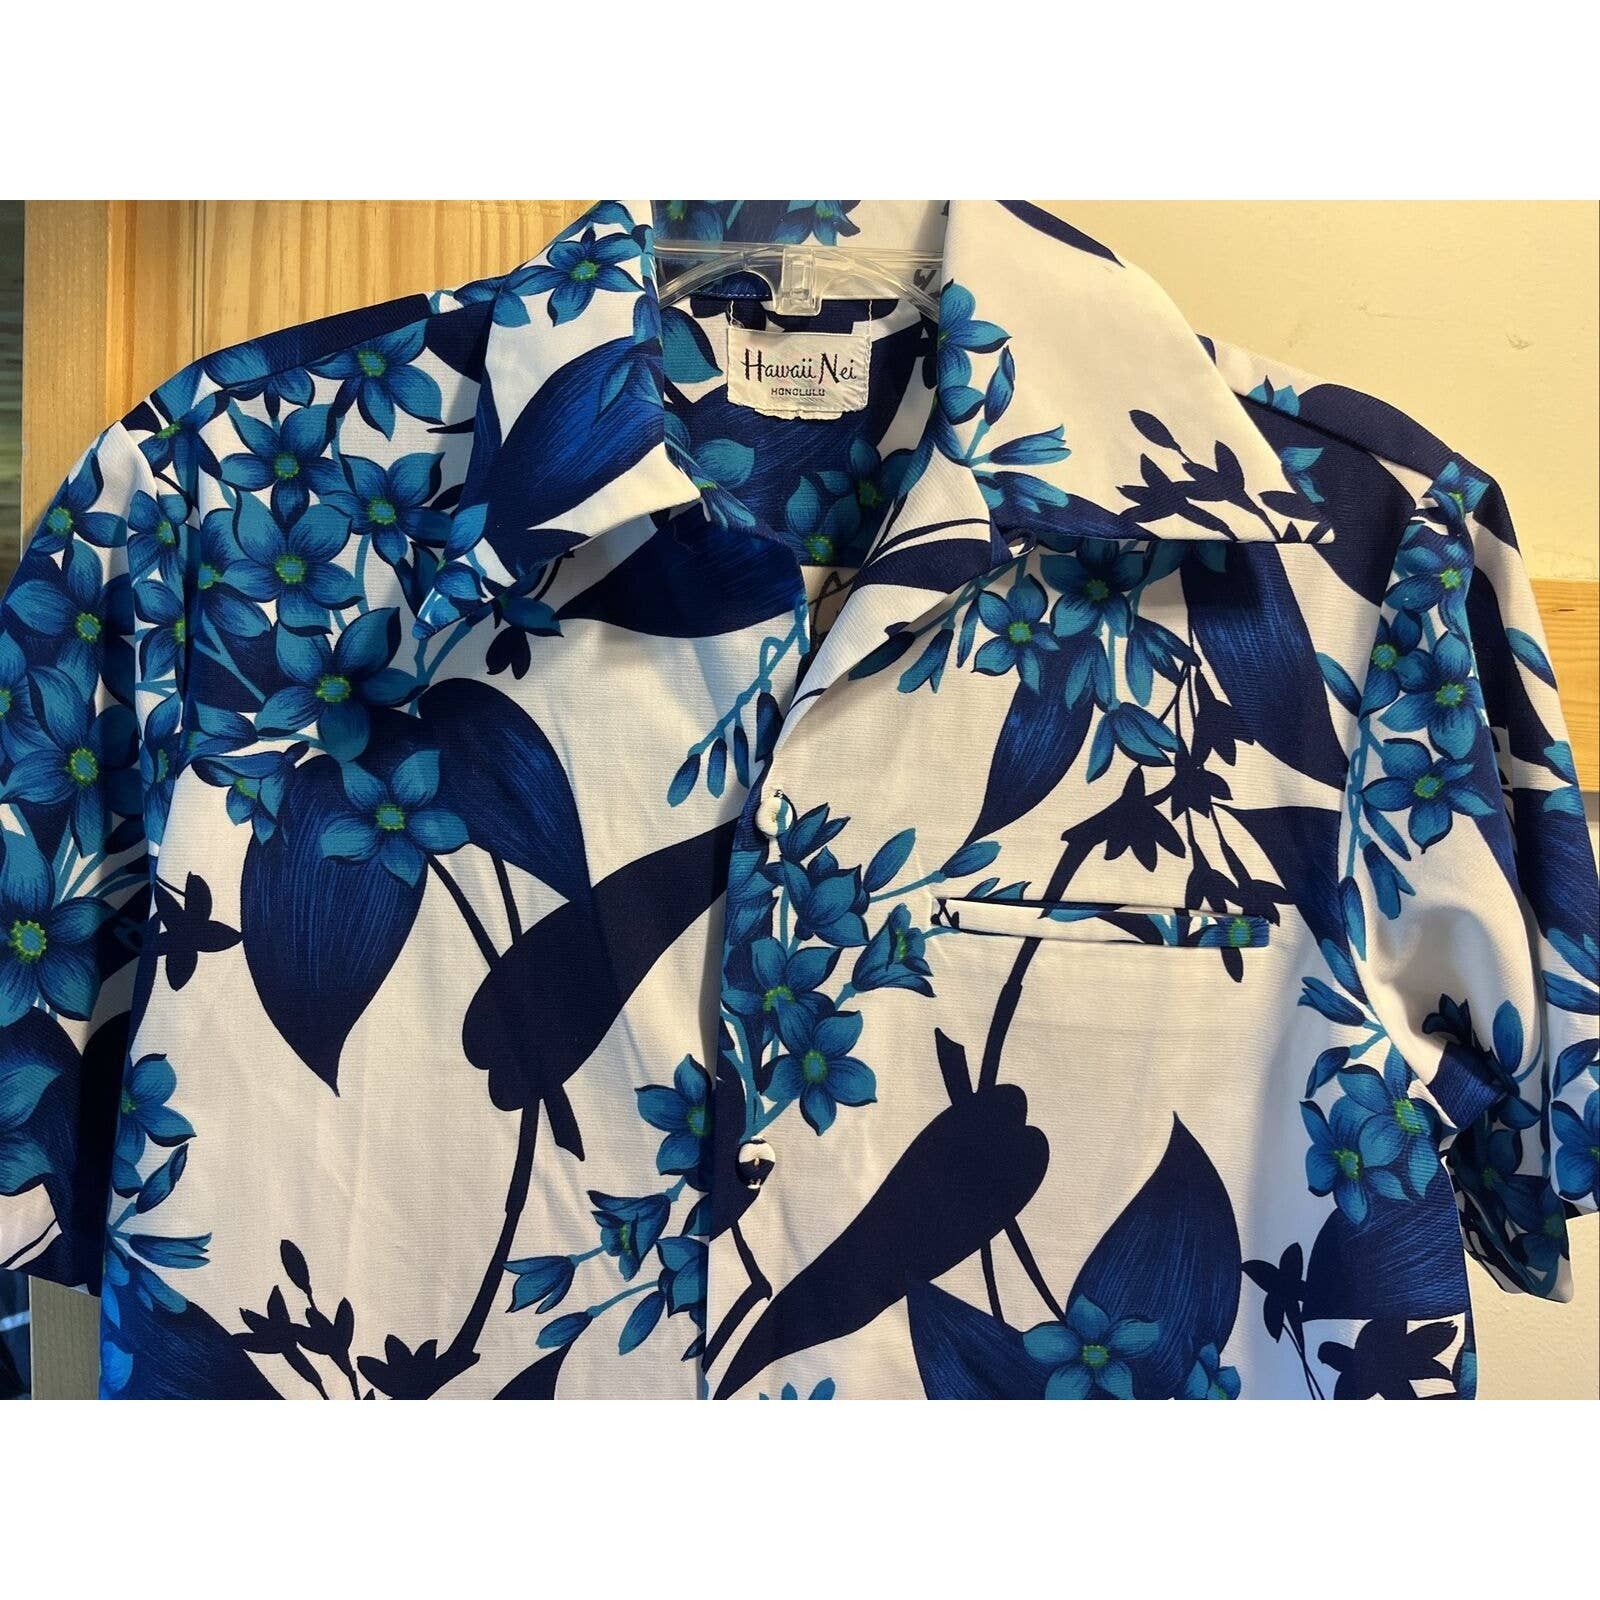 Other Hawaii Nei Honolulu VTG Mens M Blue Polyester Hawaiian Shirt Size US M / EU 48-50 / 2 - 6 Thumbnail